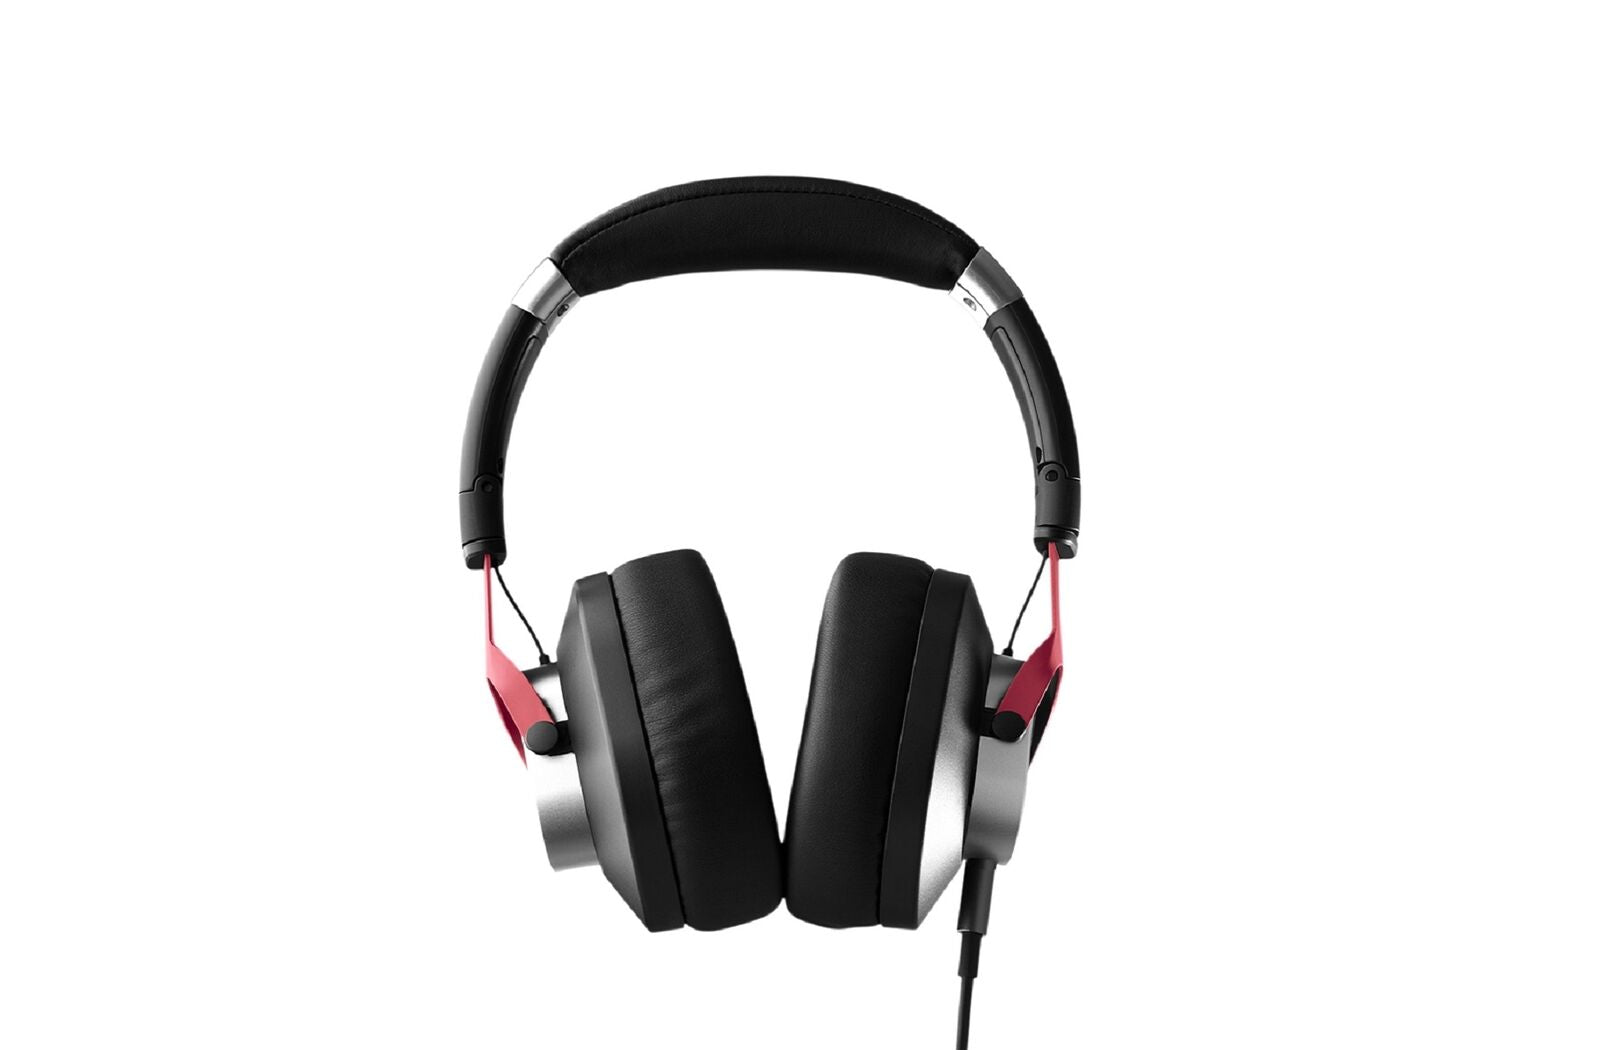 Austrian Audio Hi-X15 (Black/Red) over Ear Closed Back Headphones